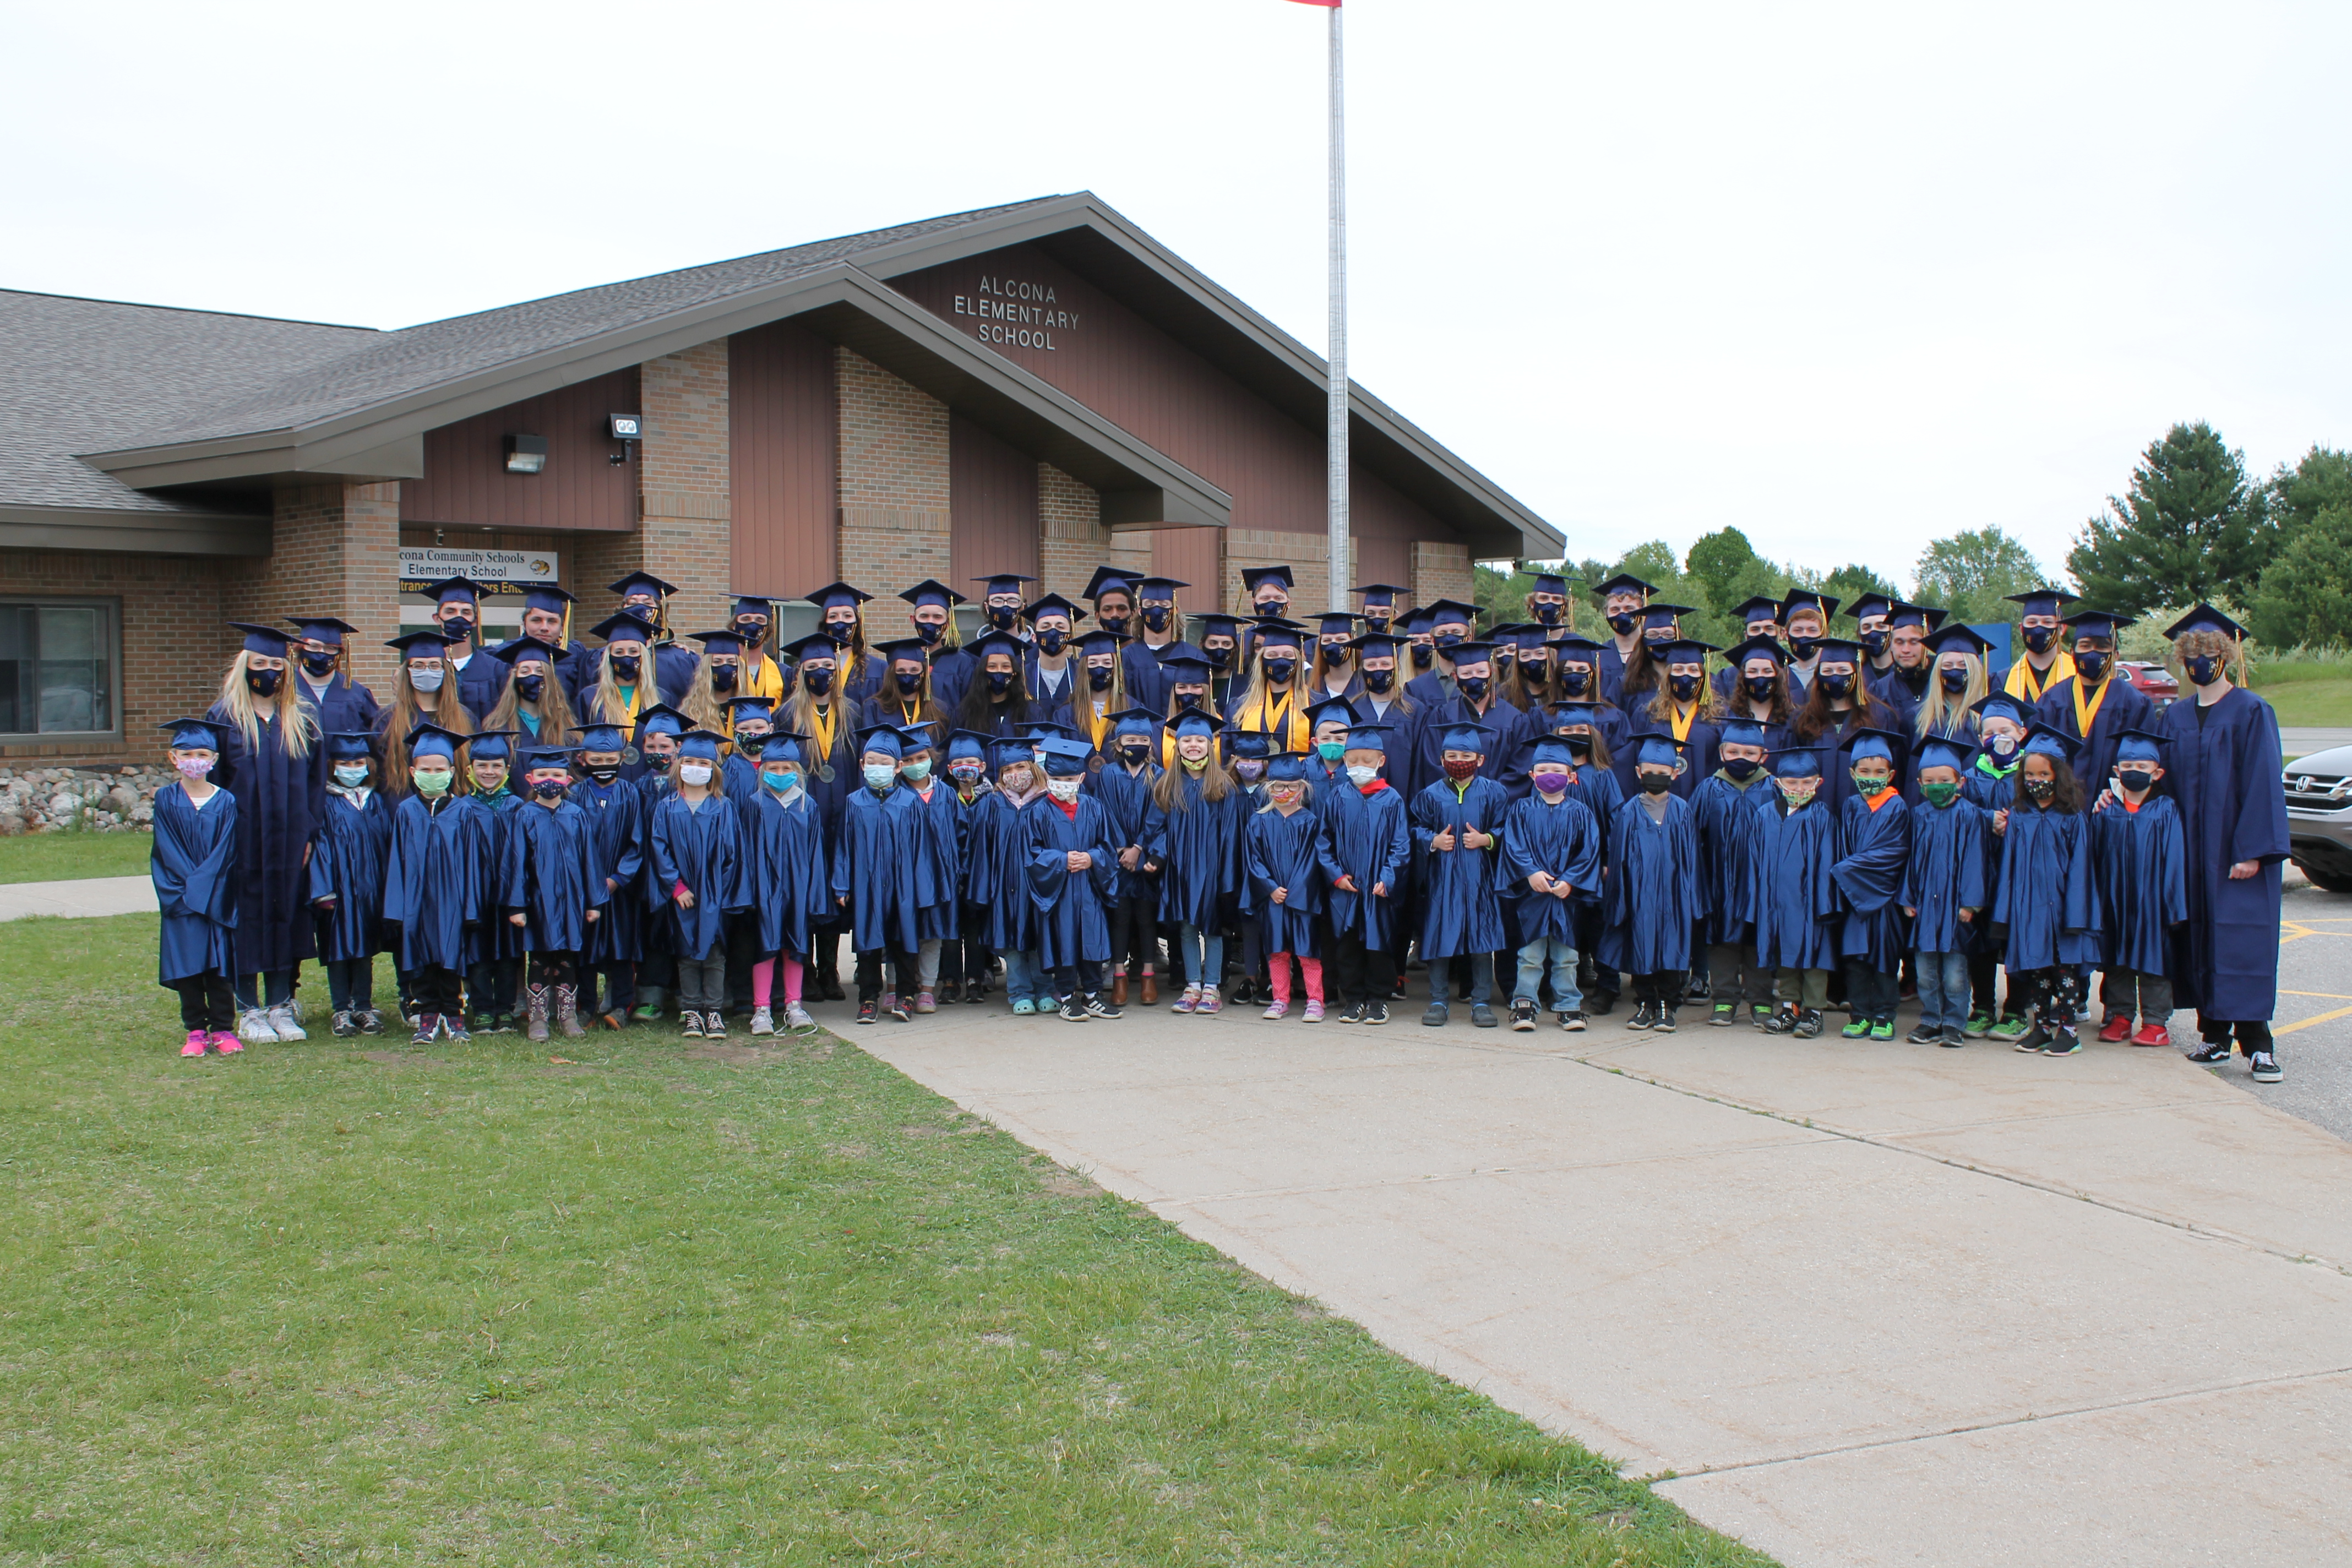 2020 Graduating Seniors and Kindergarteners